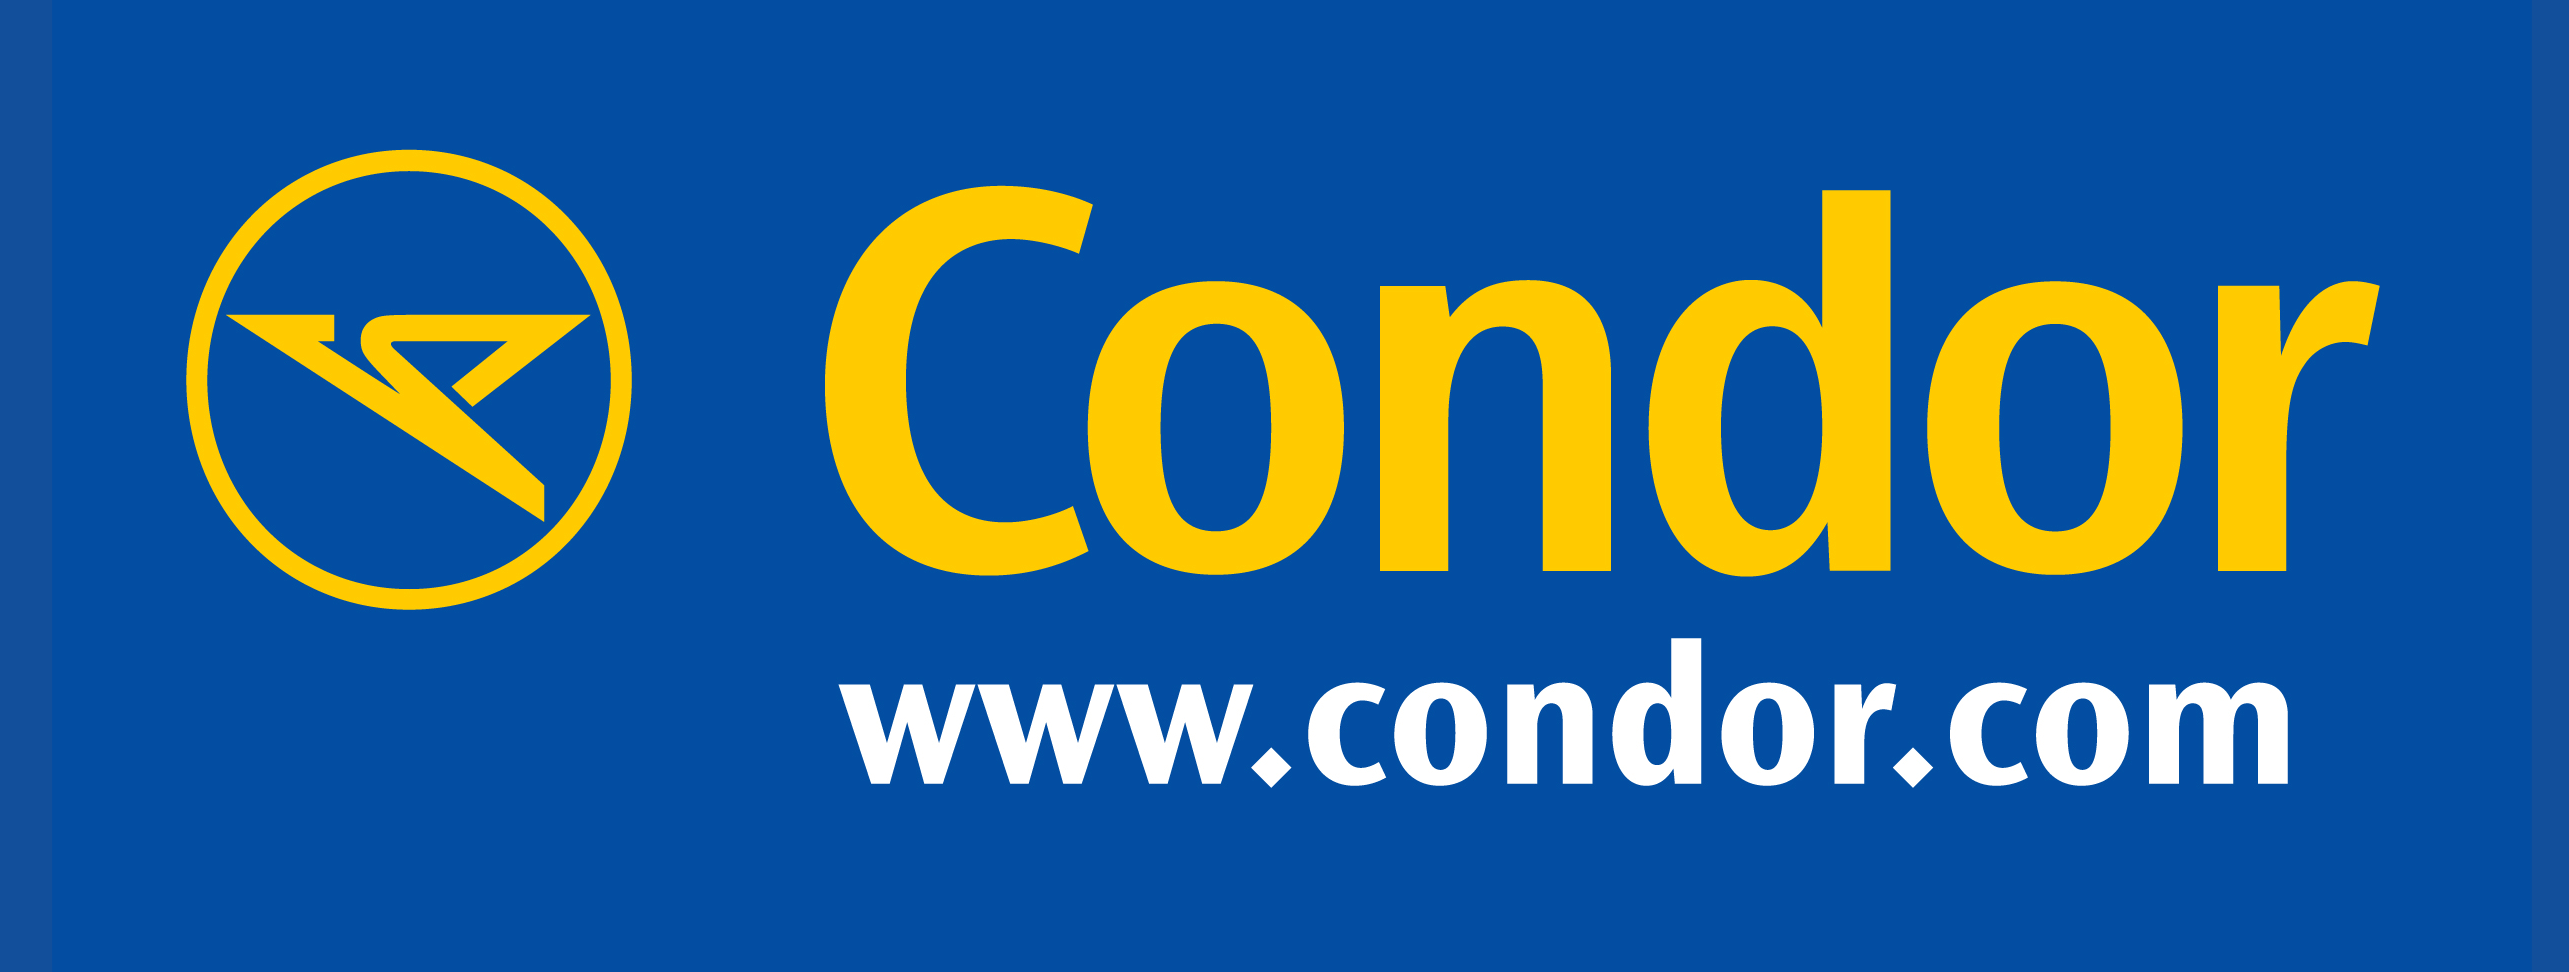 Blue Condor Logo - Condor logo.png